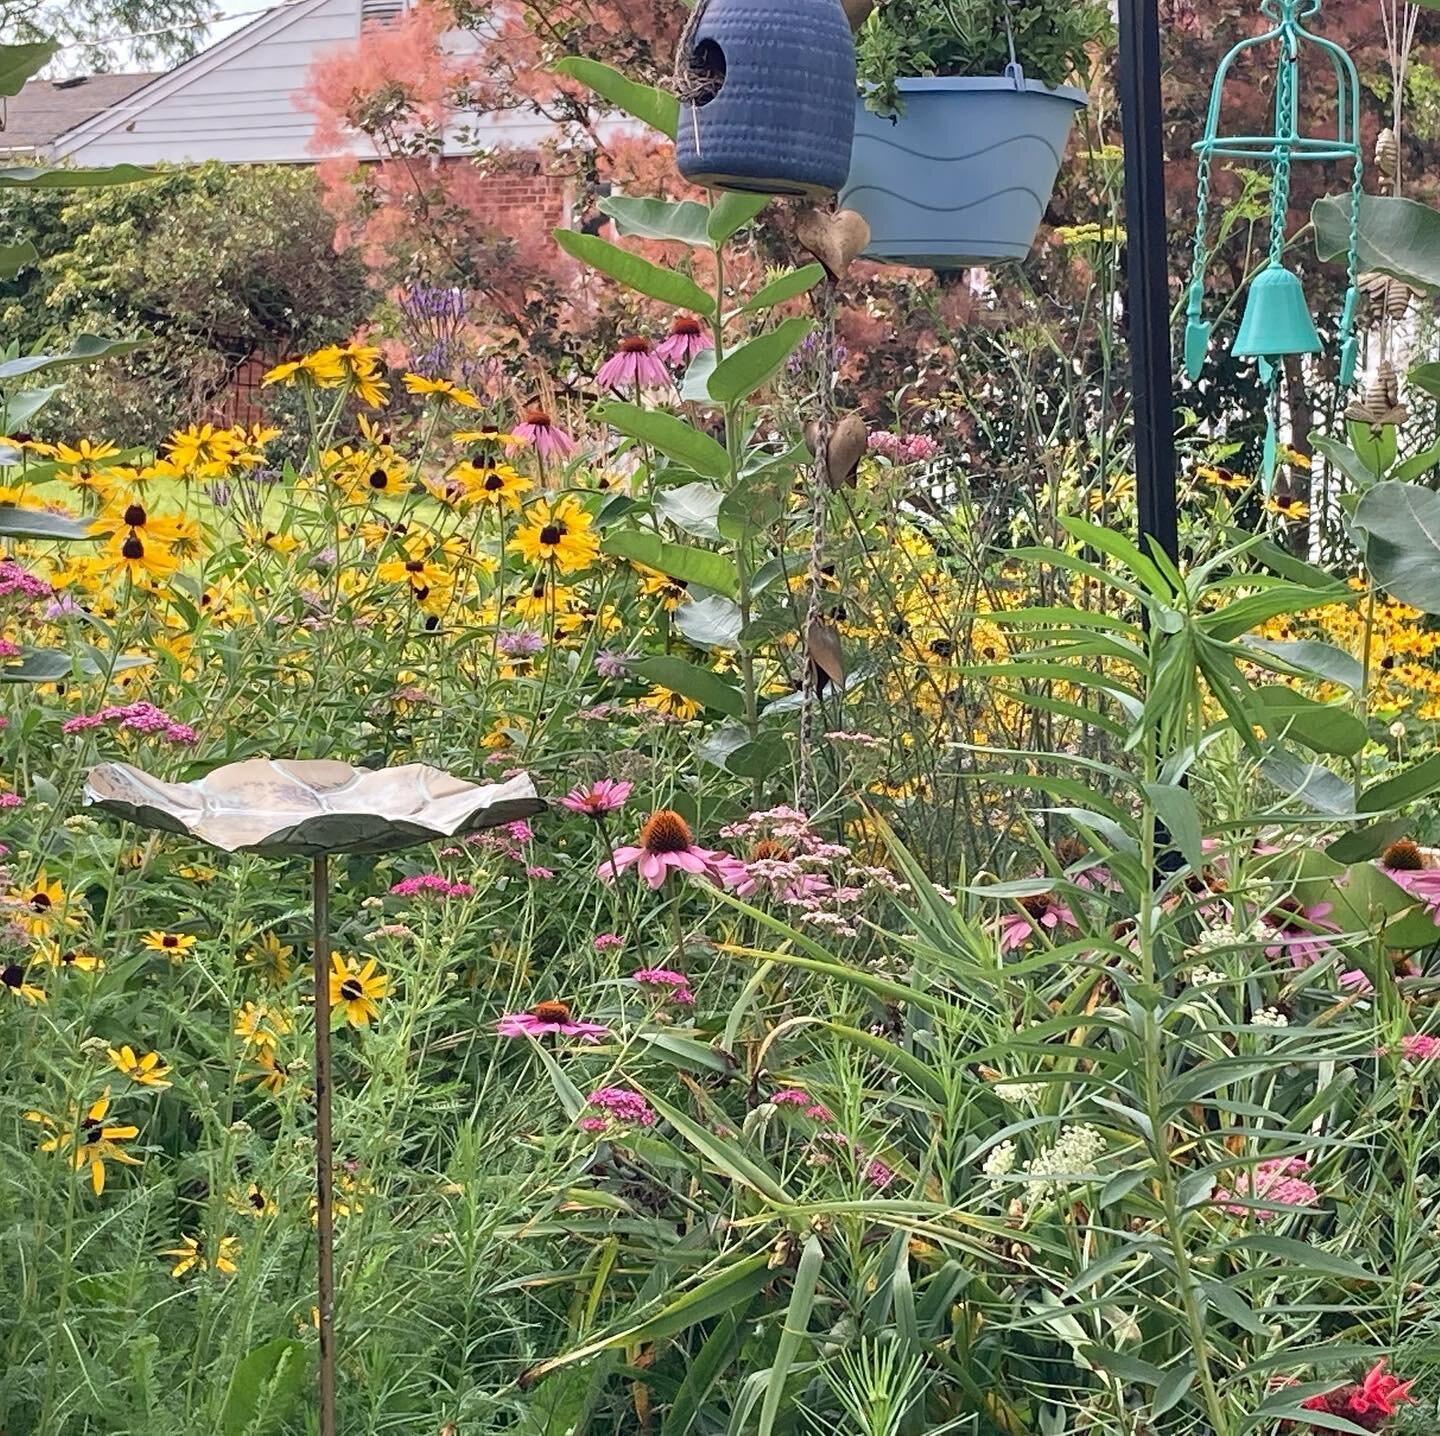 My daily backyard inspiration. 

#plantnative #butterflygarden #inspiration #pollinatorgarden #ecosystems #milkweedformonarchs #purpleconeflower #yarrow #blackeyedsusan #spiderwort #beebalm #bees